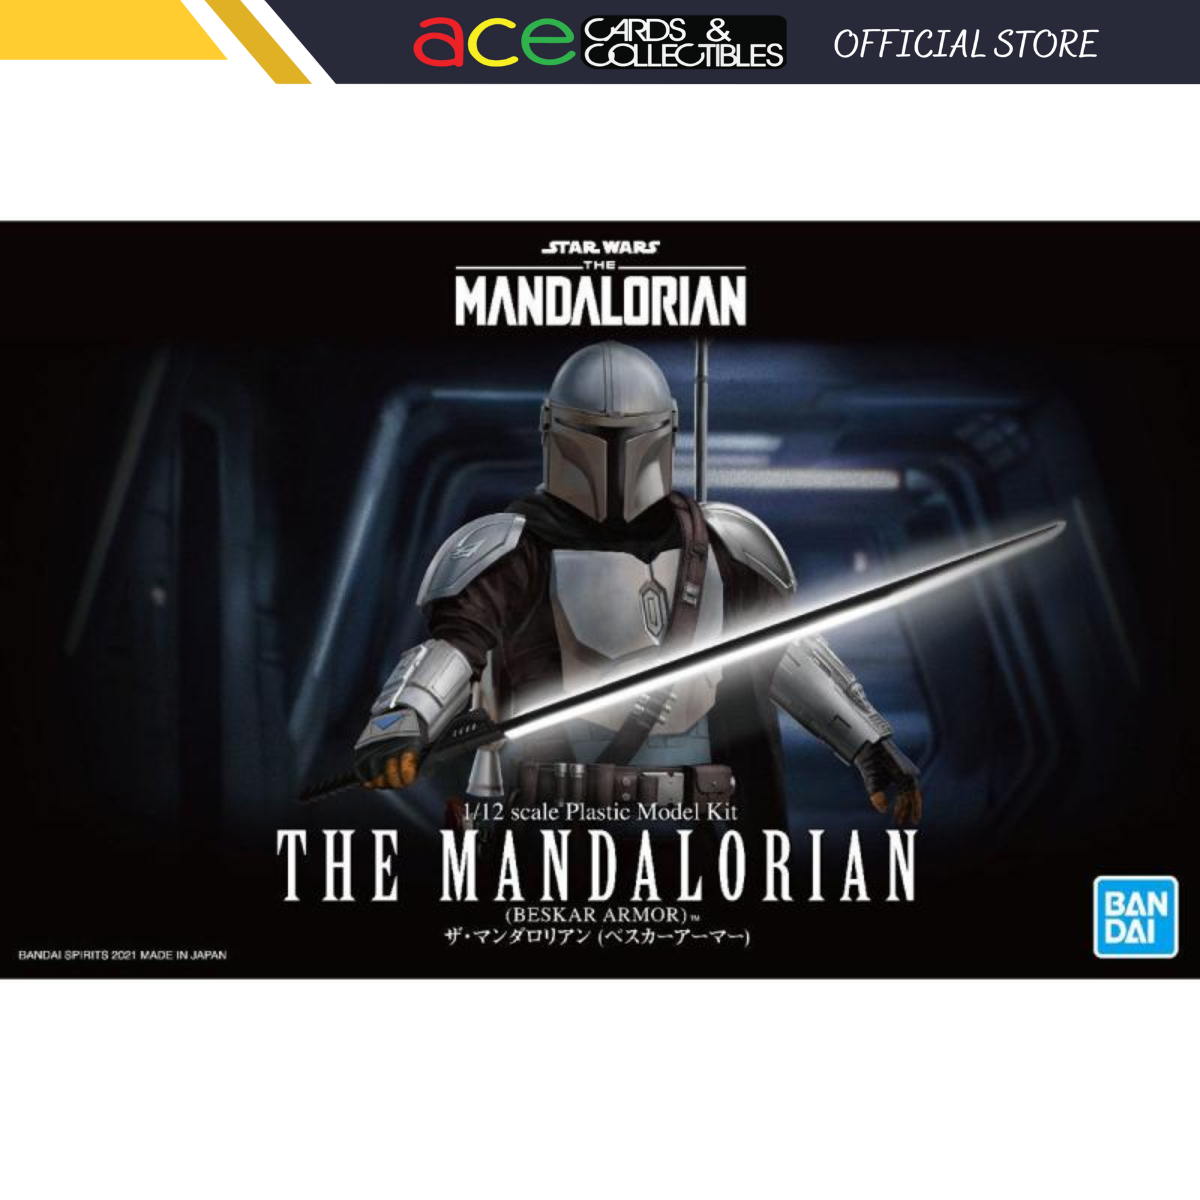 Maquette 3D en métal Star Wars - The Mandalorian